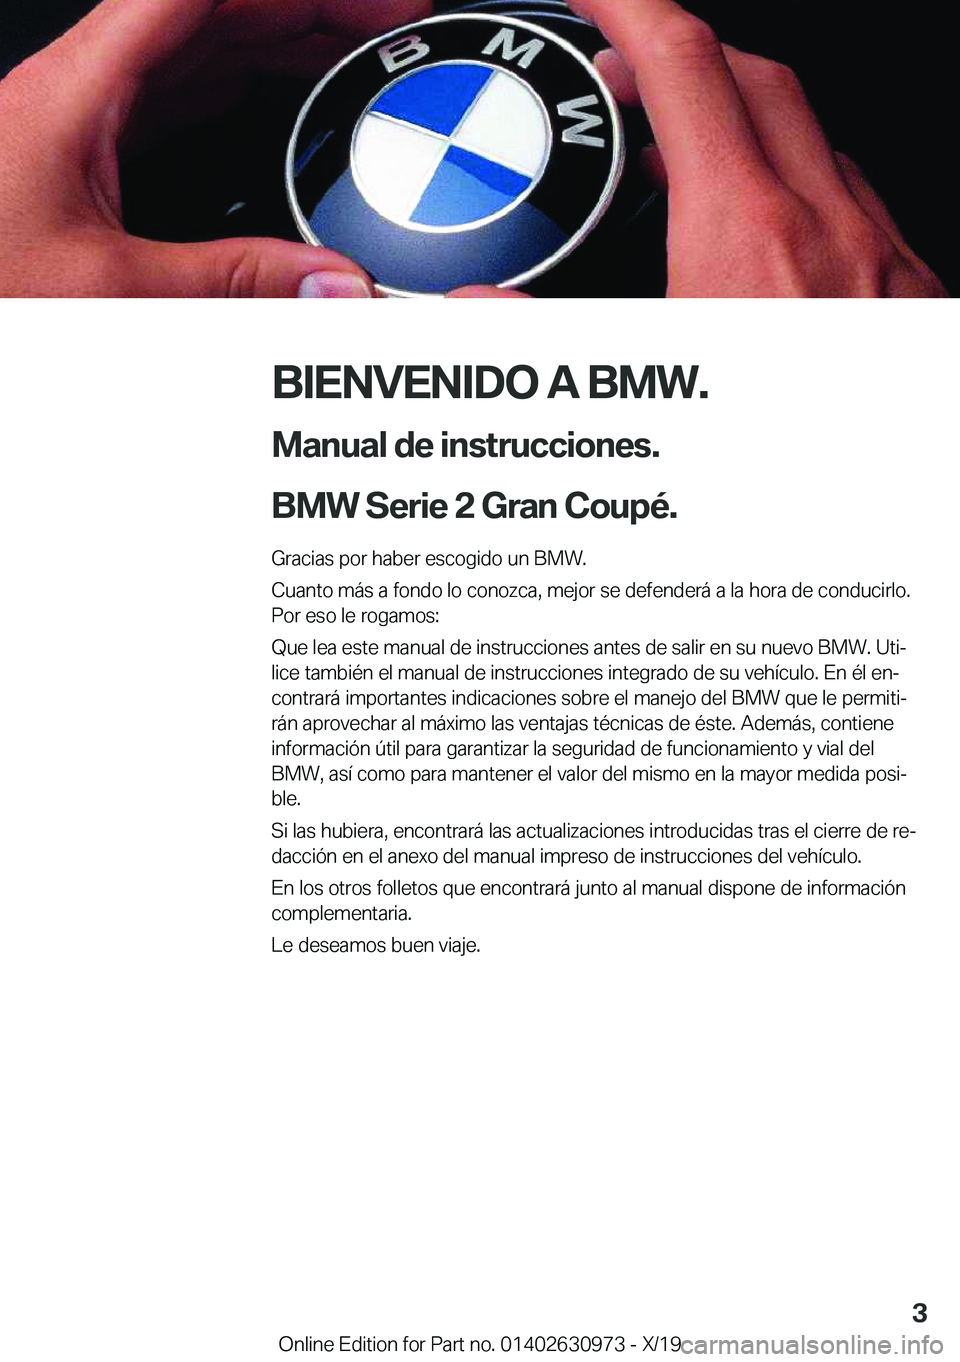 BMW 2 SERIES GRAN COUPE 2020  Manuales de Empleo (in Spanish) �B�I�E�N�V�E�N�I�D�O��A��B�M�W�.
�M�a�n�u�a�l��d�e��i�n�s�t�r�u�c�c�i�o�n�e�s�.
�B�M�W��S�e�r�i�e��2��G�r�a�n��C�o�u�p�